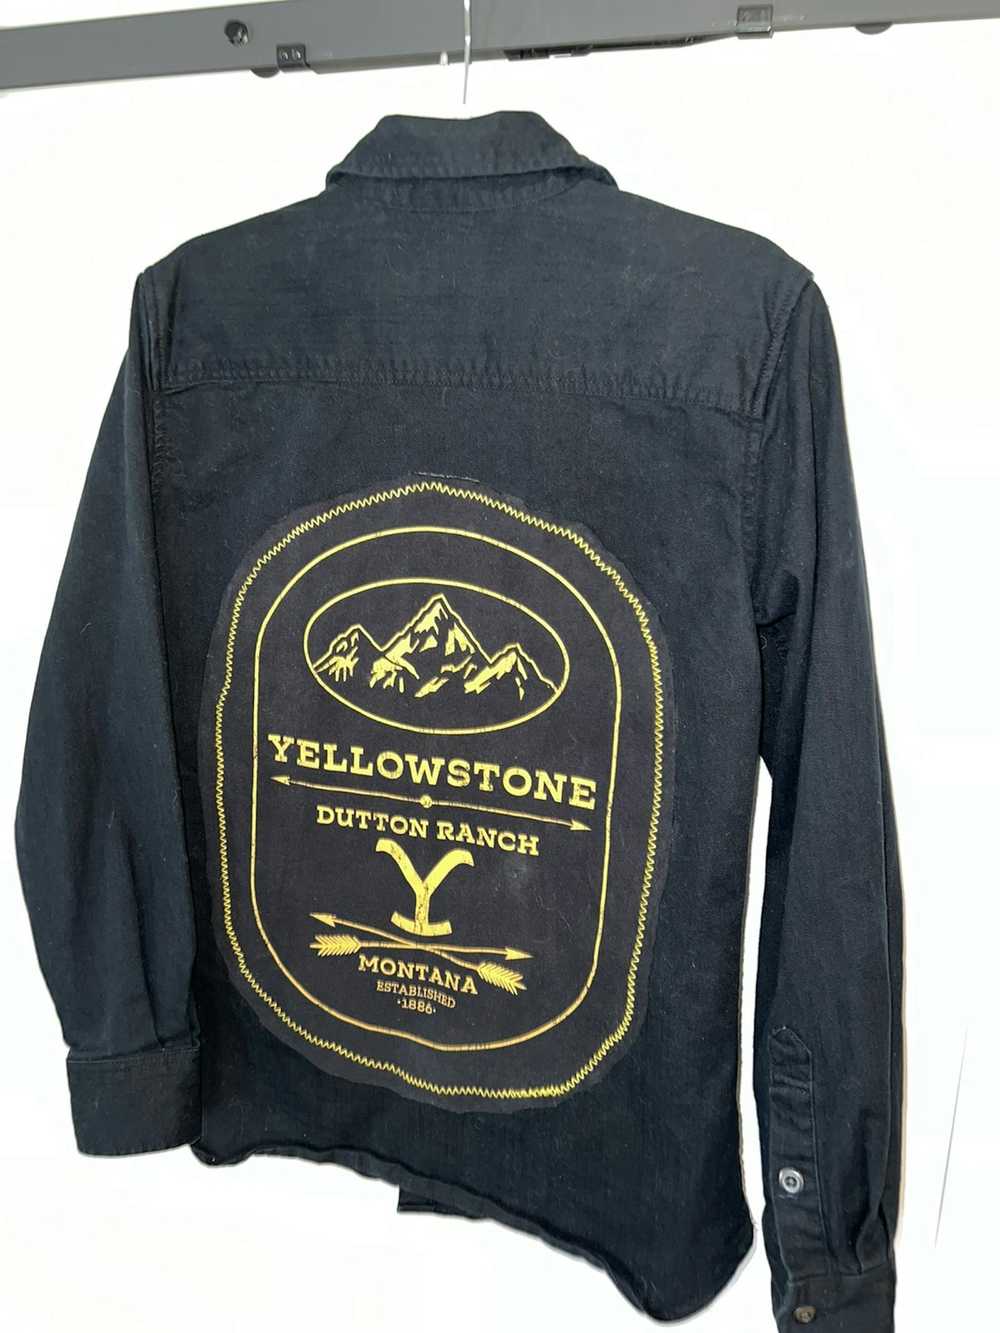 Mossimo Yellowstone TV Show Jacket - image 4